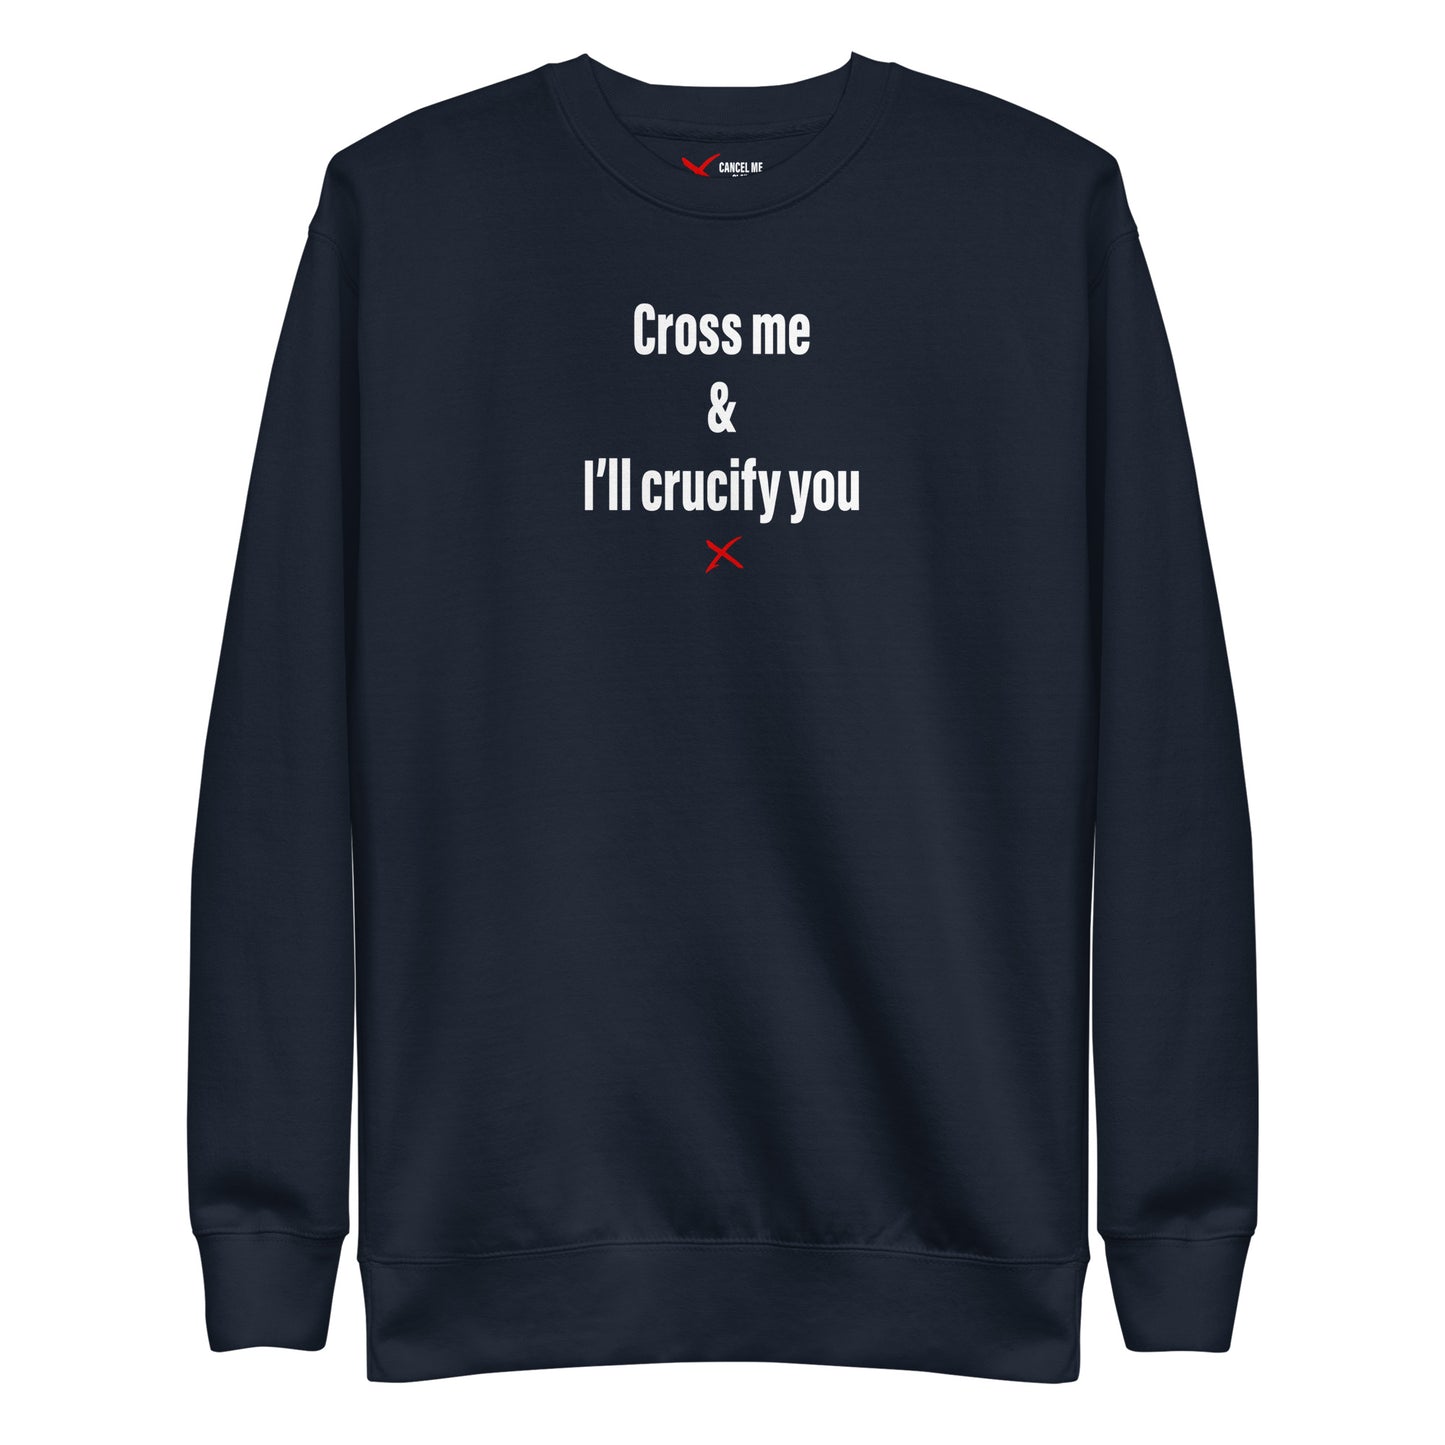 Cross me & I'll crucify you - Sweatshirt